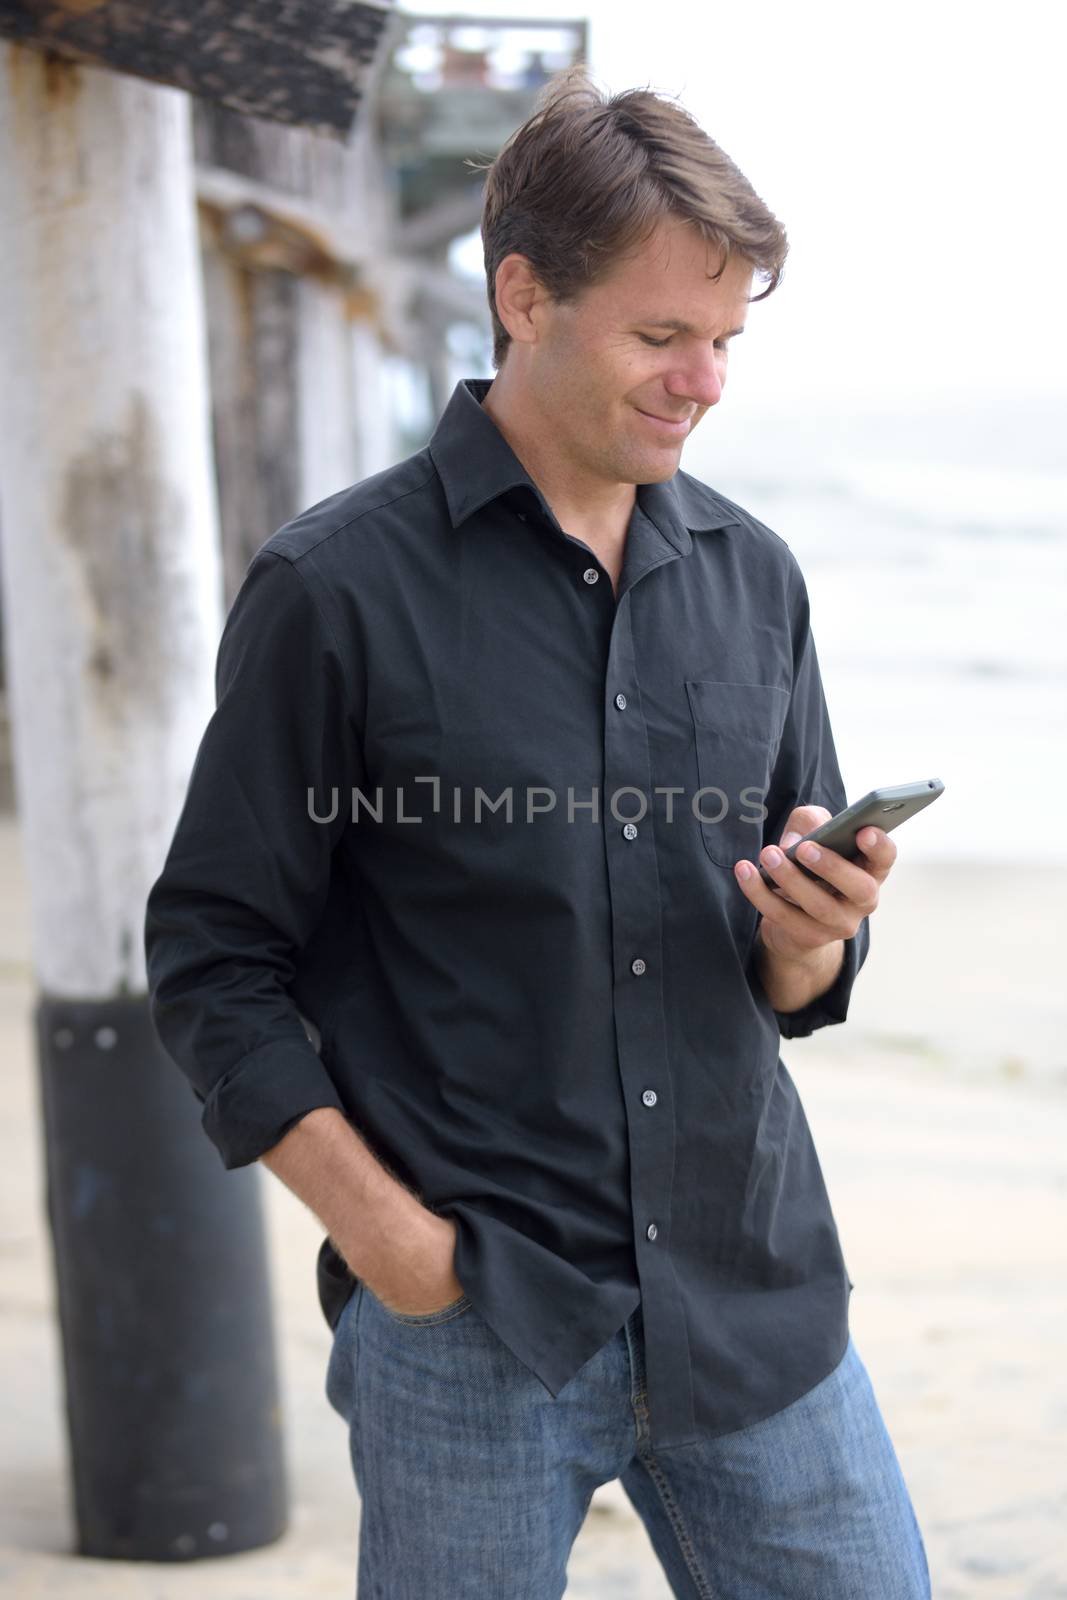 Man communicating with smart phone at beach by shakzu